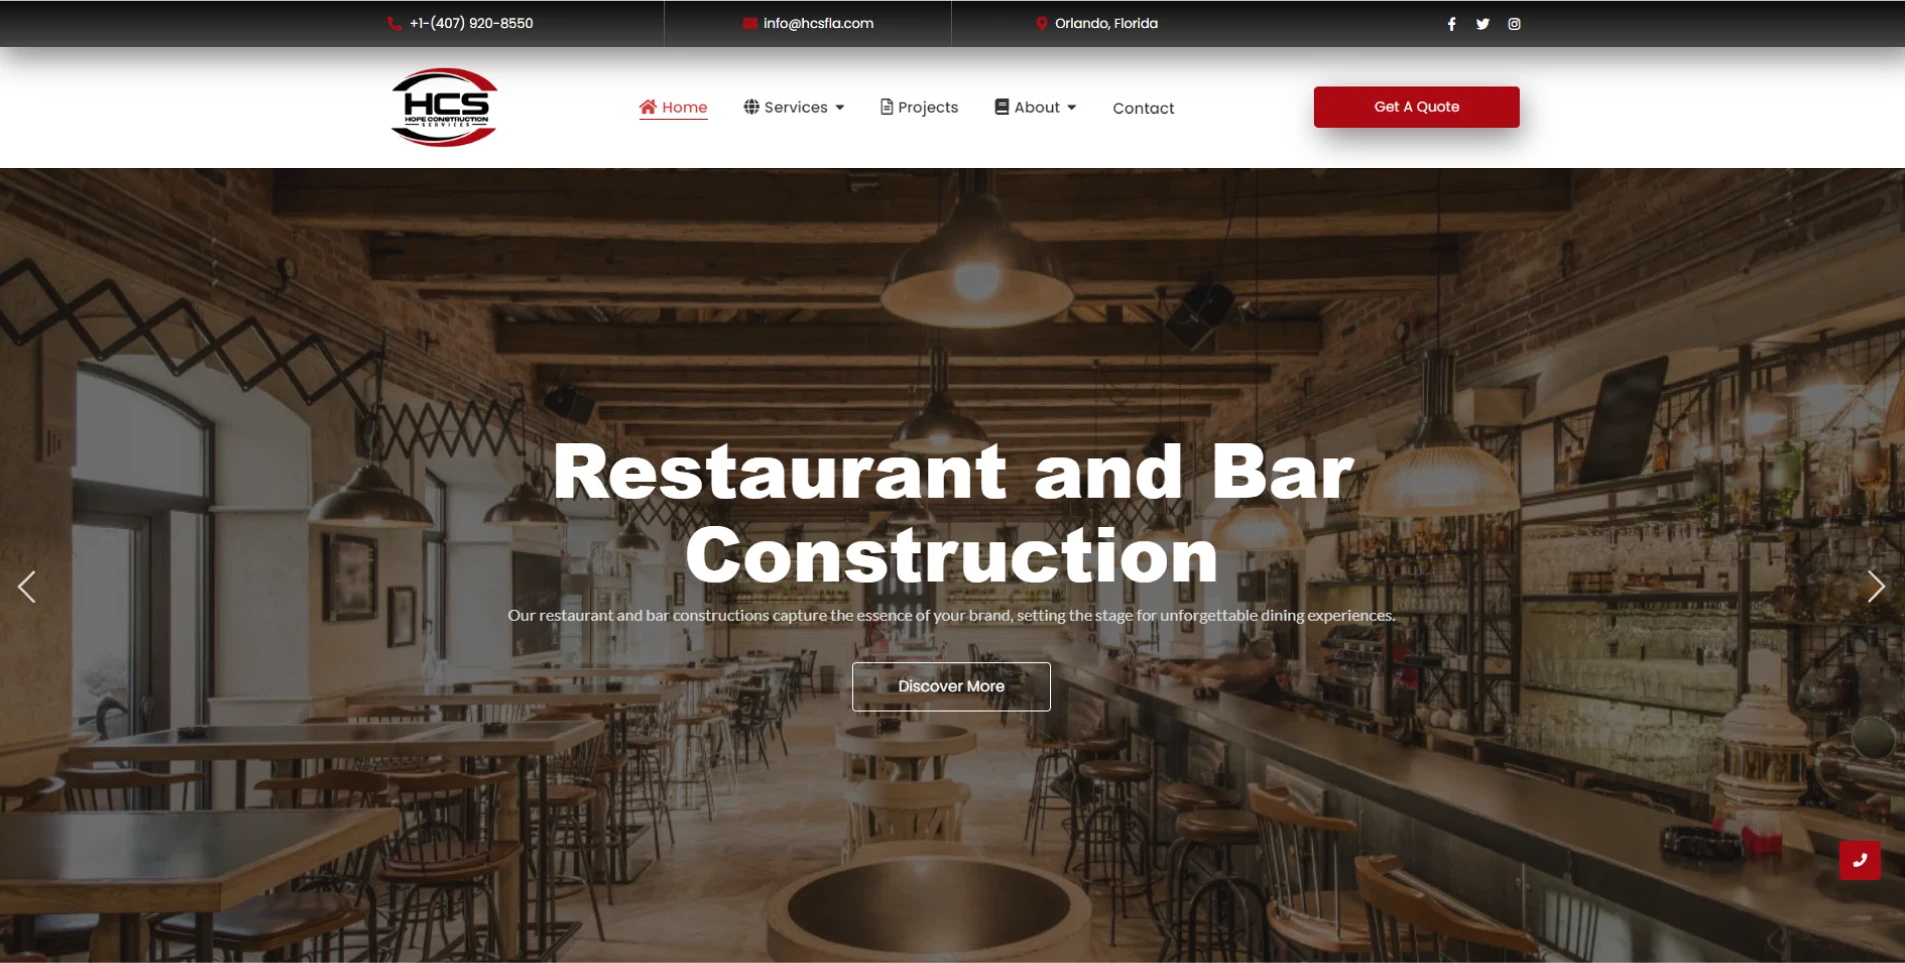 Hope Construction website homepage showcasing innovative construction web design.